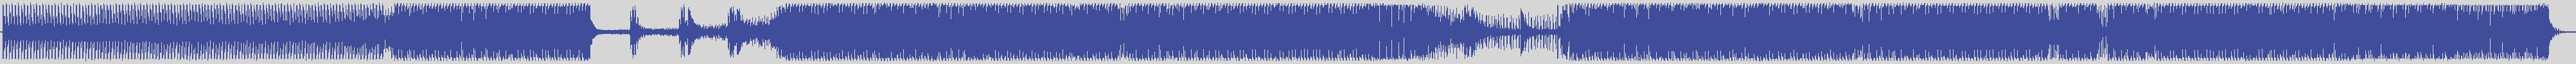 atomic_recordings [AR012] Collatrax - Goodlovin' [Gtr Mix] audio wave form